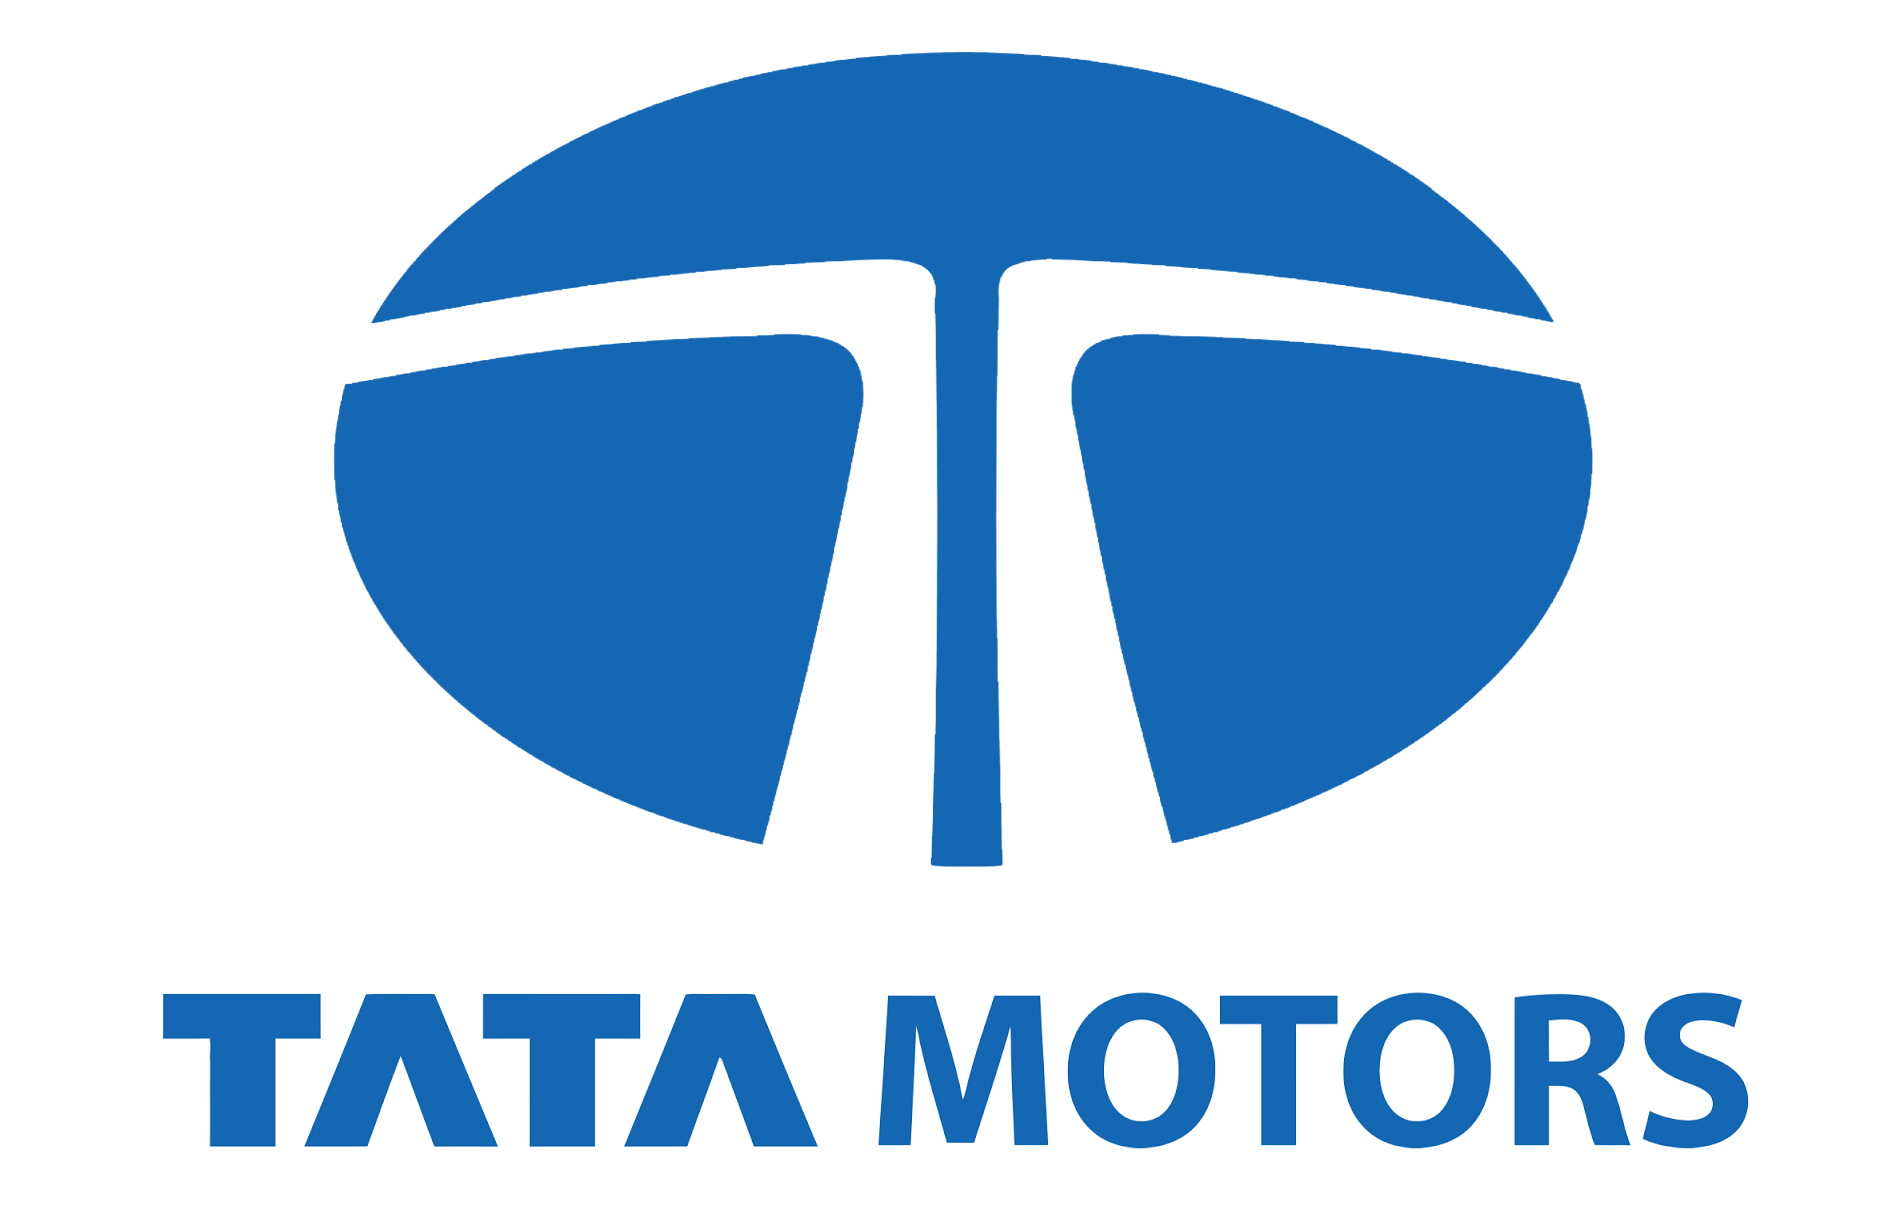 Tata Motors Cars Showroom - Tiwari Automobiles|Show Room|Automotive